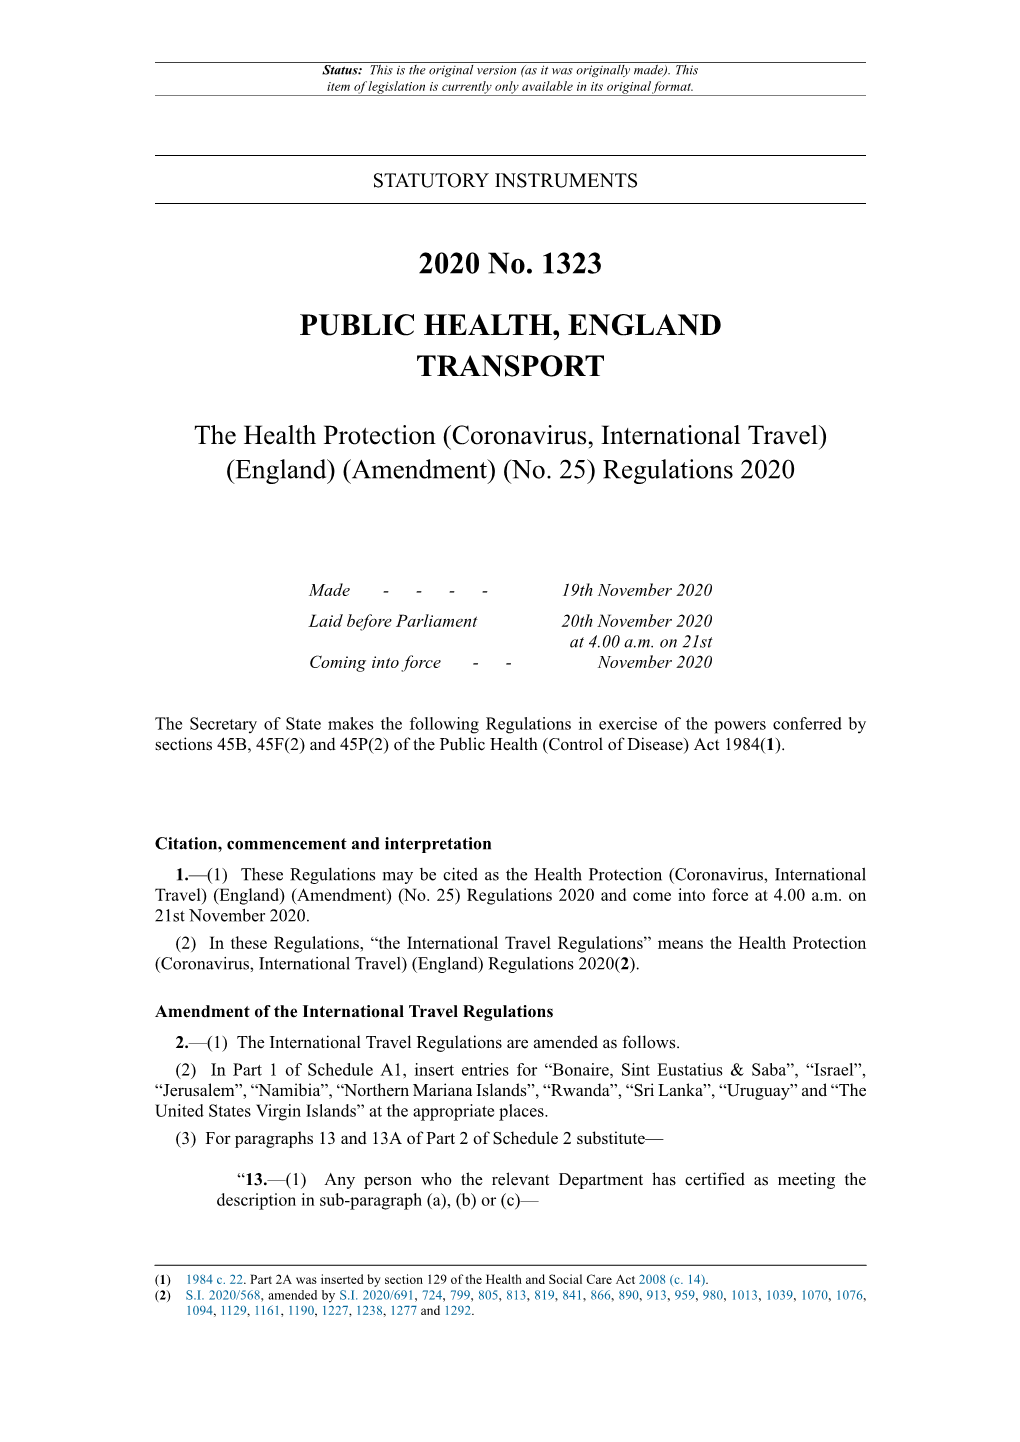 The Health Protection (Coronavirus, International Travel) (England) (Amendment) (No. 25) Regulations 2020